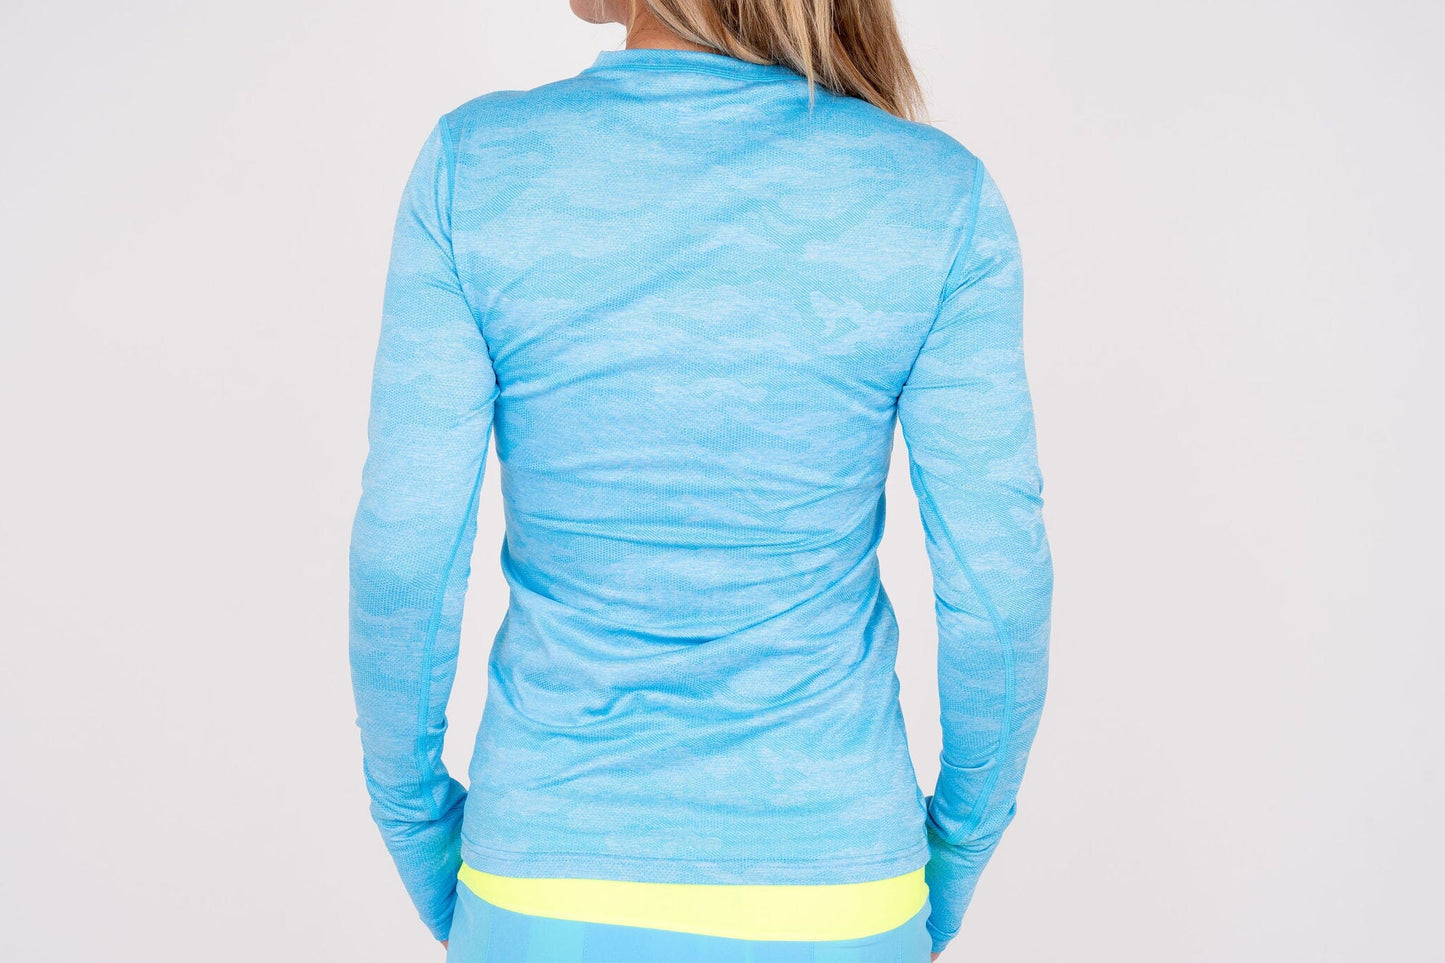 Jordan's Collarless Collection Long Sleeve - Neon Blue Ghost Camo Women's Golf Shirt Taylor Jordan Apparel 